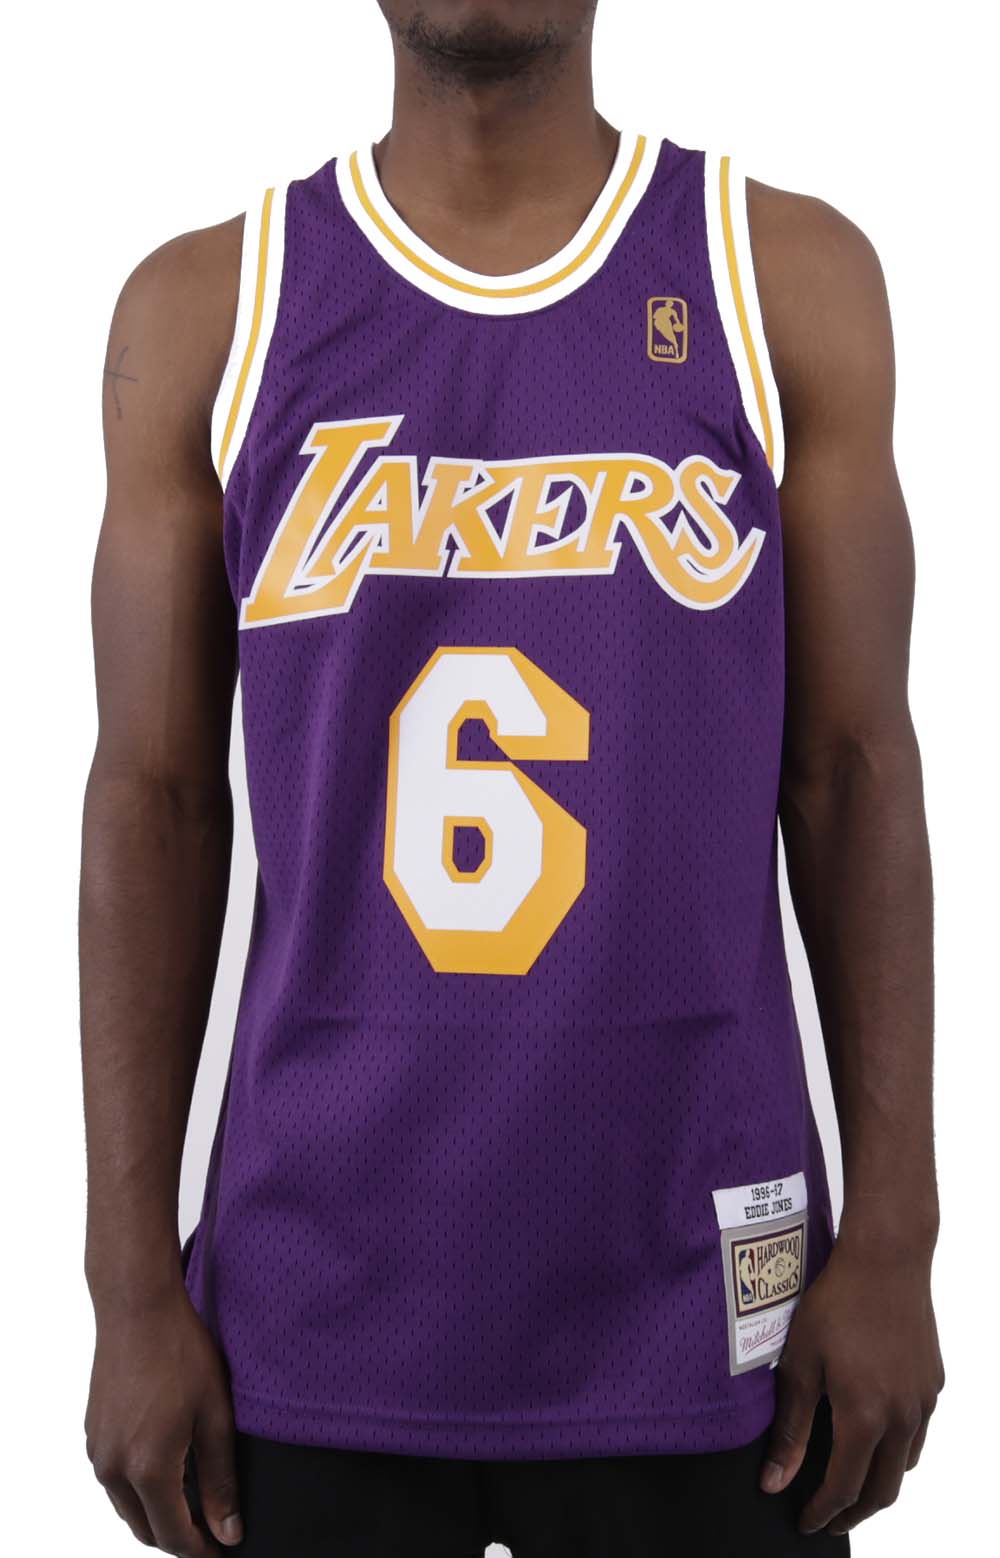 99' Lakers Dennis Rodman jersey